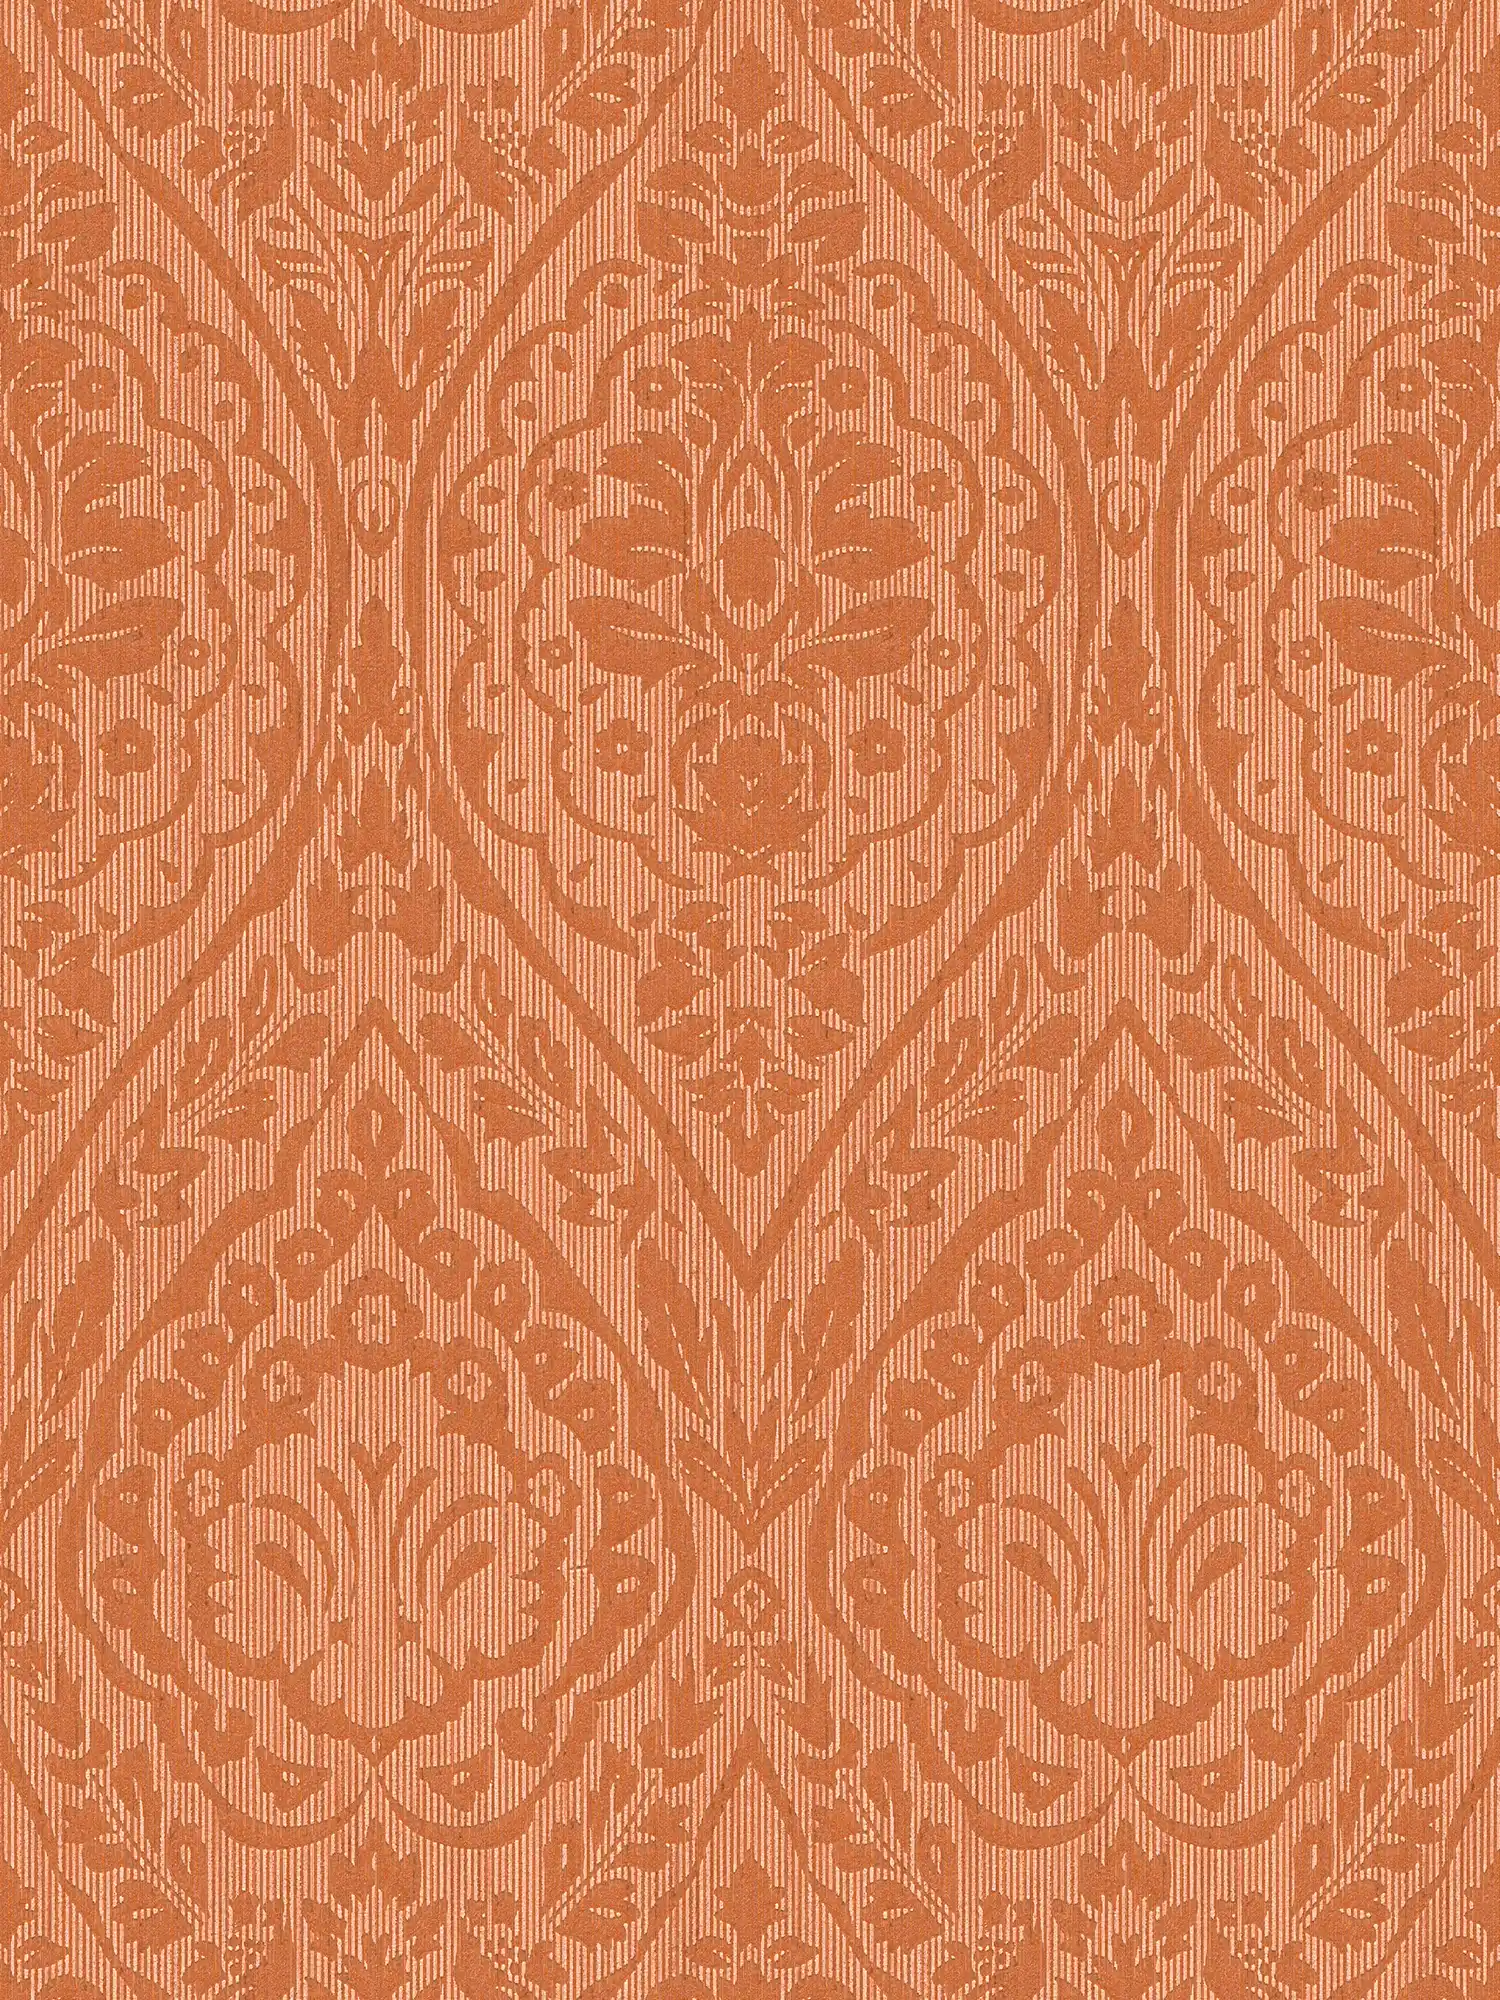         Tapete florales Ornamentmuster mit dimensionalem Struktureffekt – Orange
    